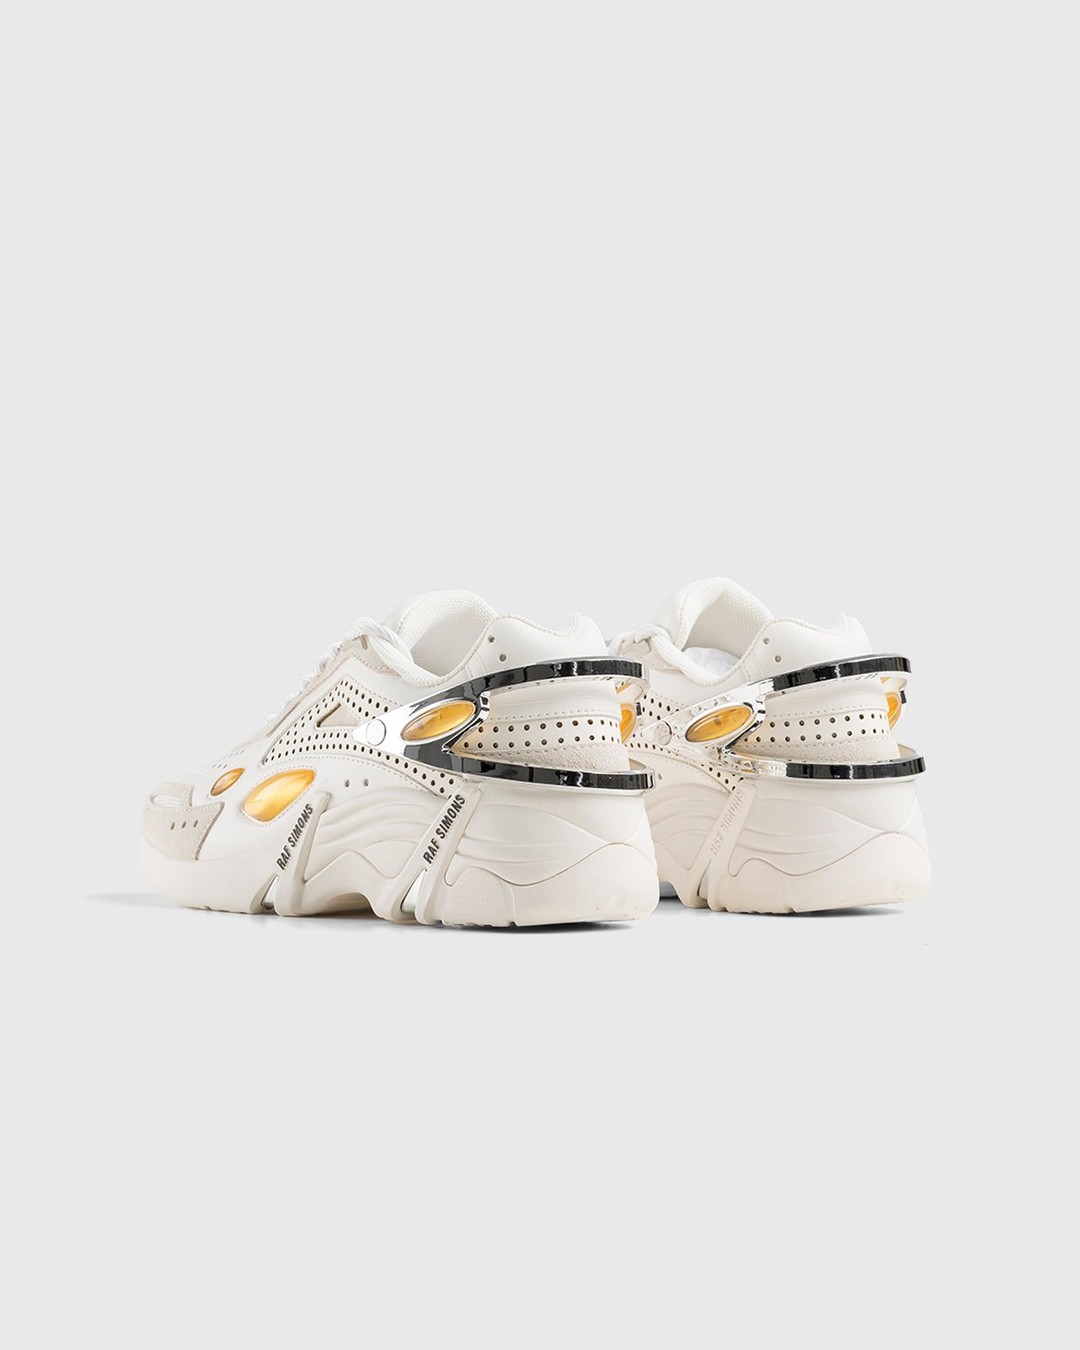 Raf Simons – Cylon 21 White Alyssum - Low Top Sneakers - White - Image 4